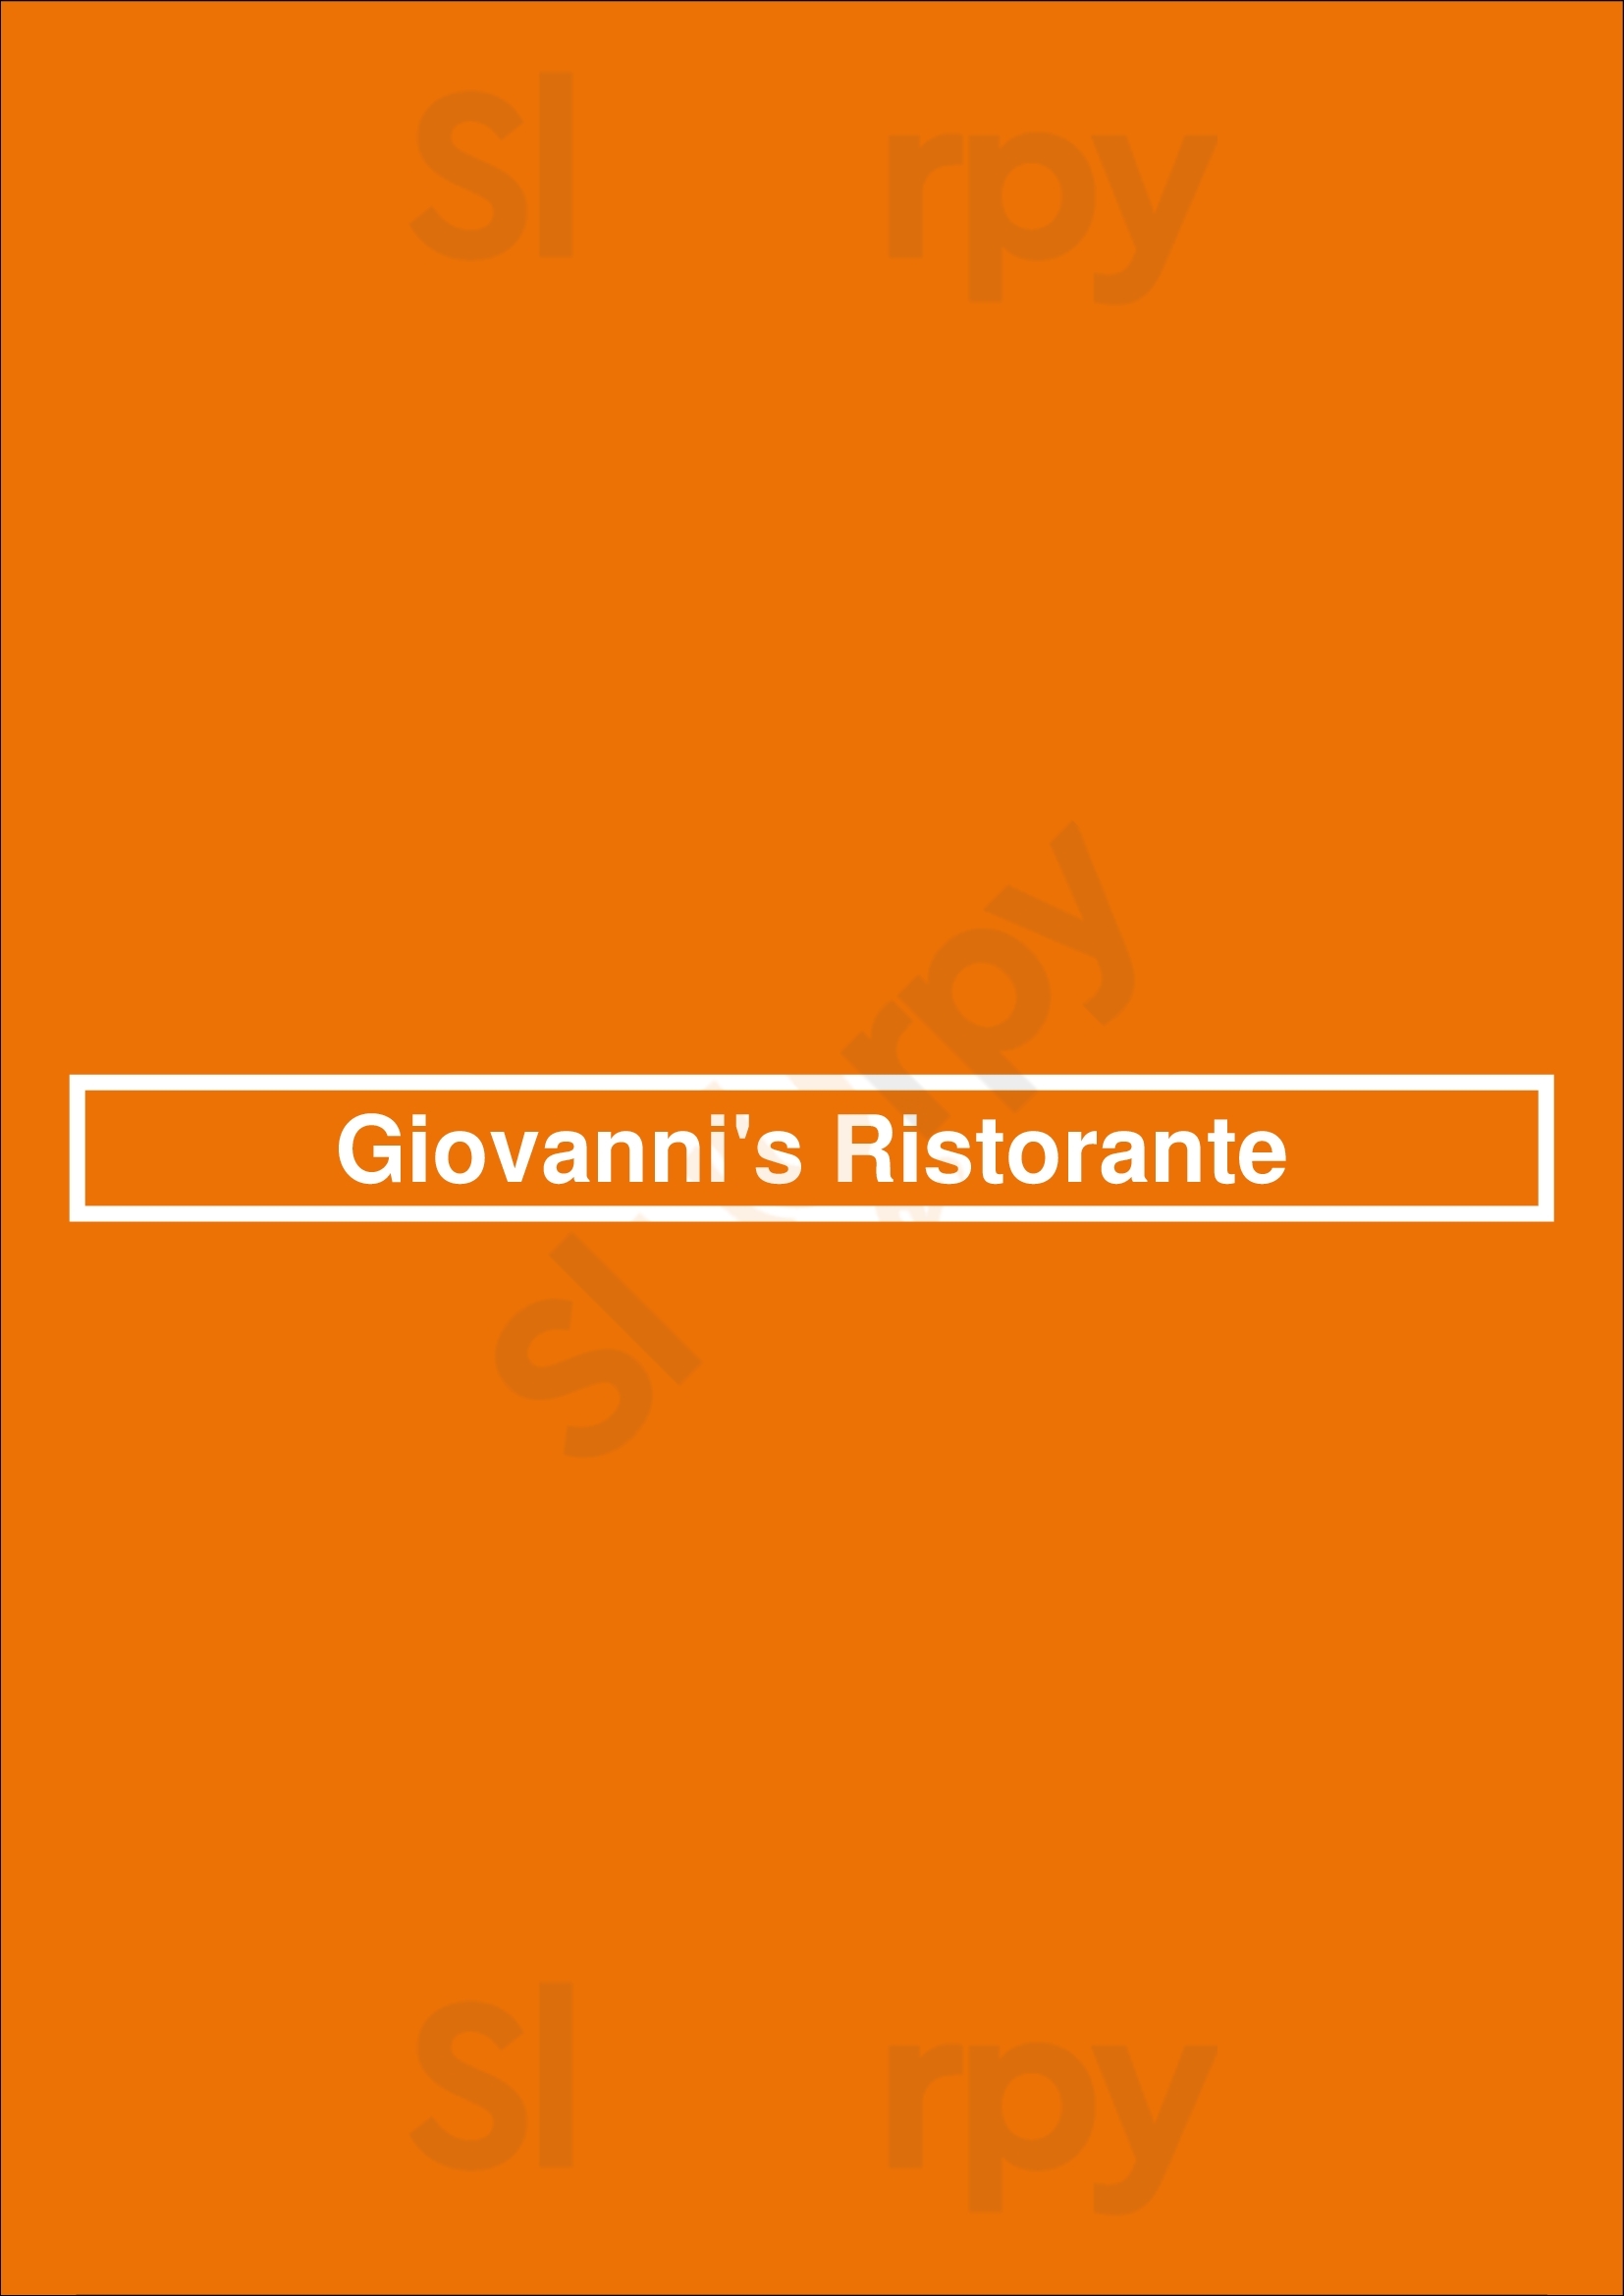 Giovanni's Ristorante Beachwood Menu - 1